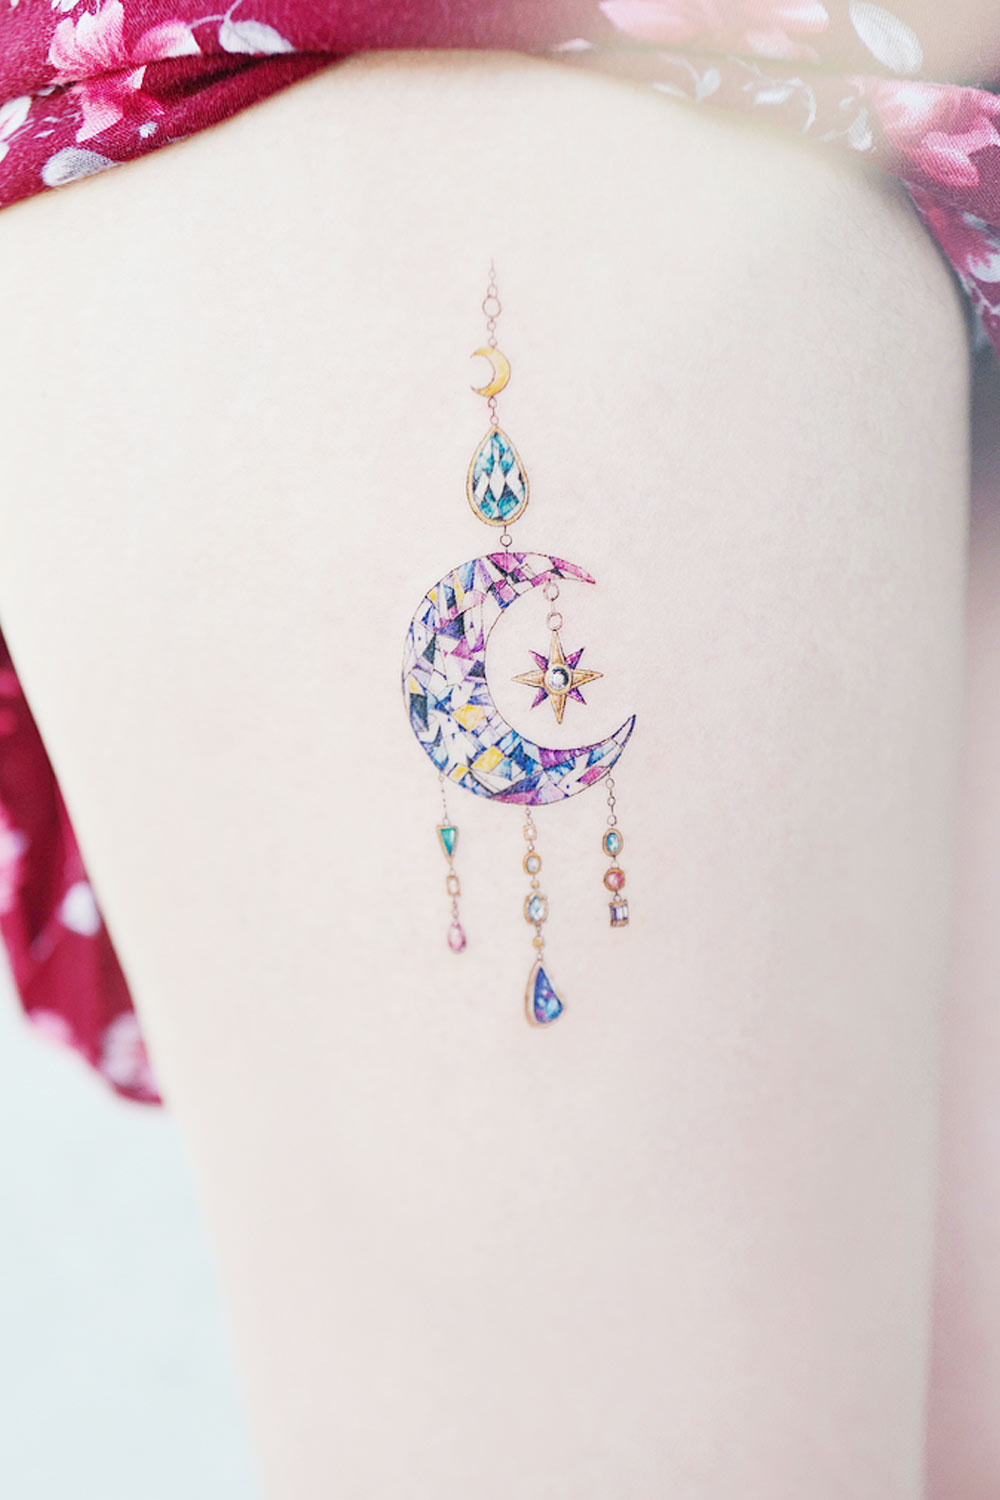 Crystallic Moon Dream Catcher Design Tattoo